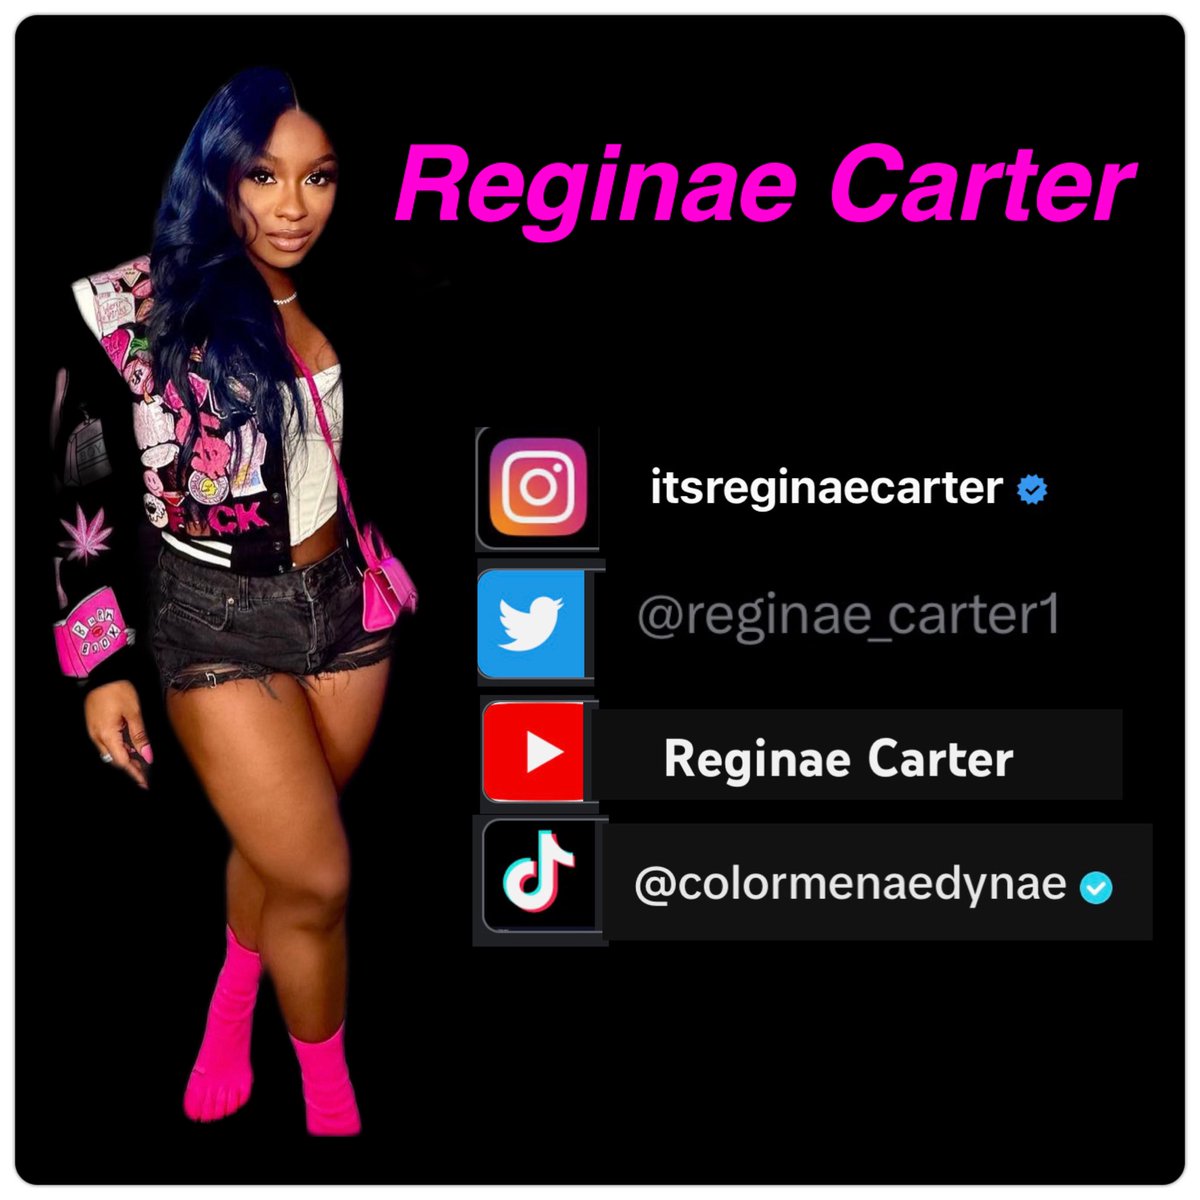 It’s Nae Day 🖤 follow her on ALL platforms 🖤

#ReginaeCarter